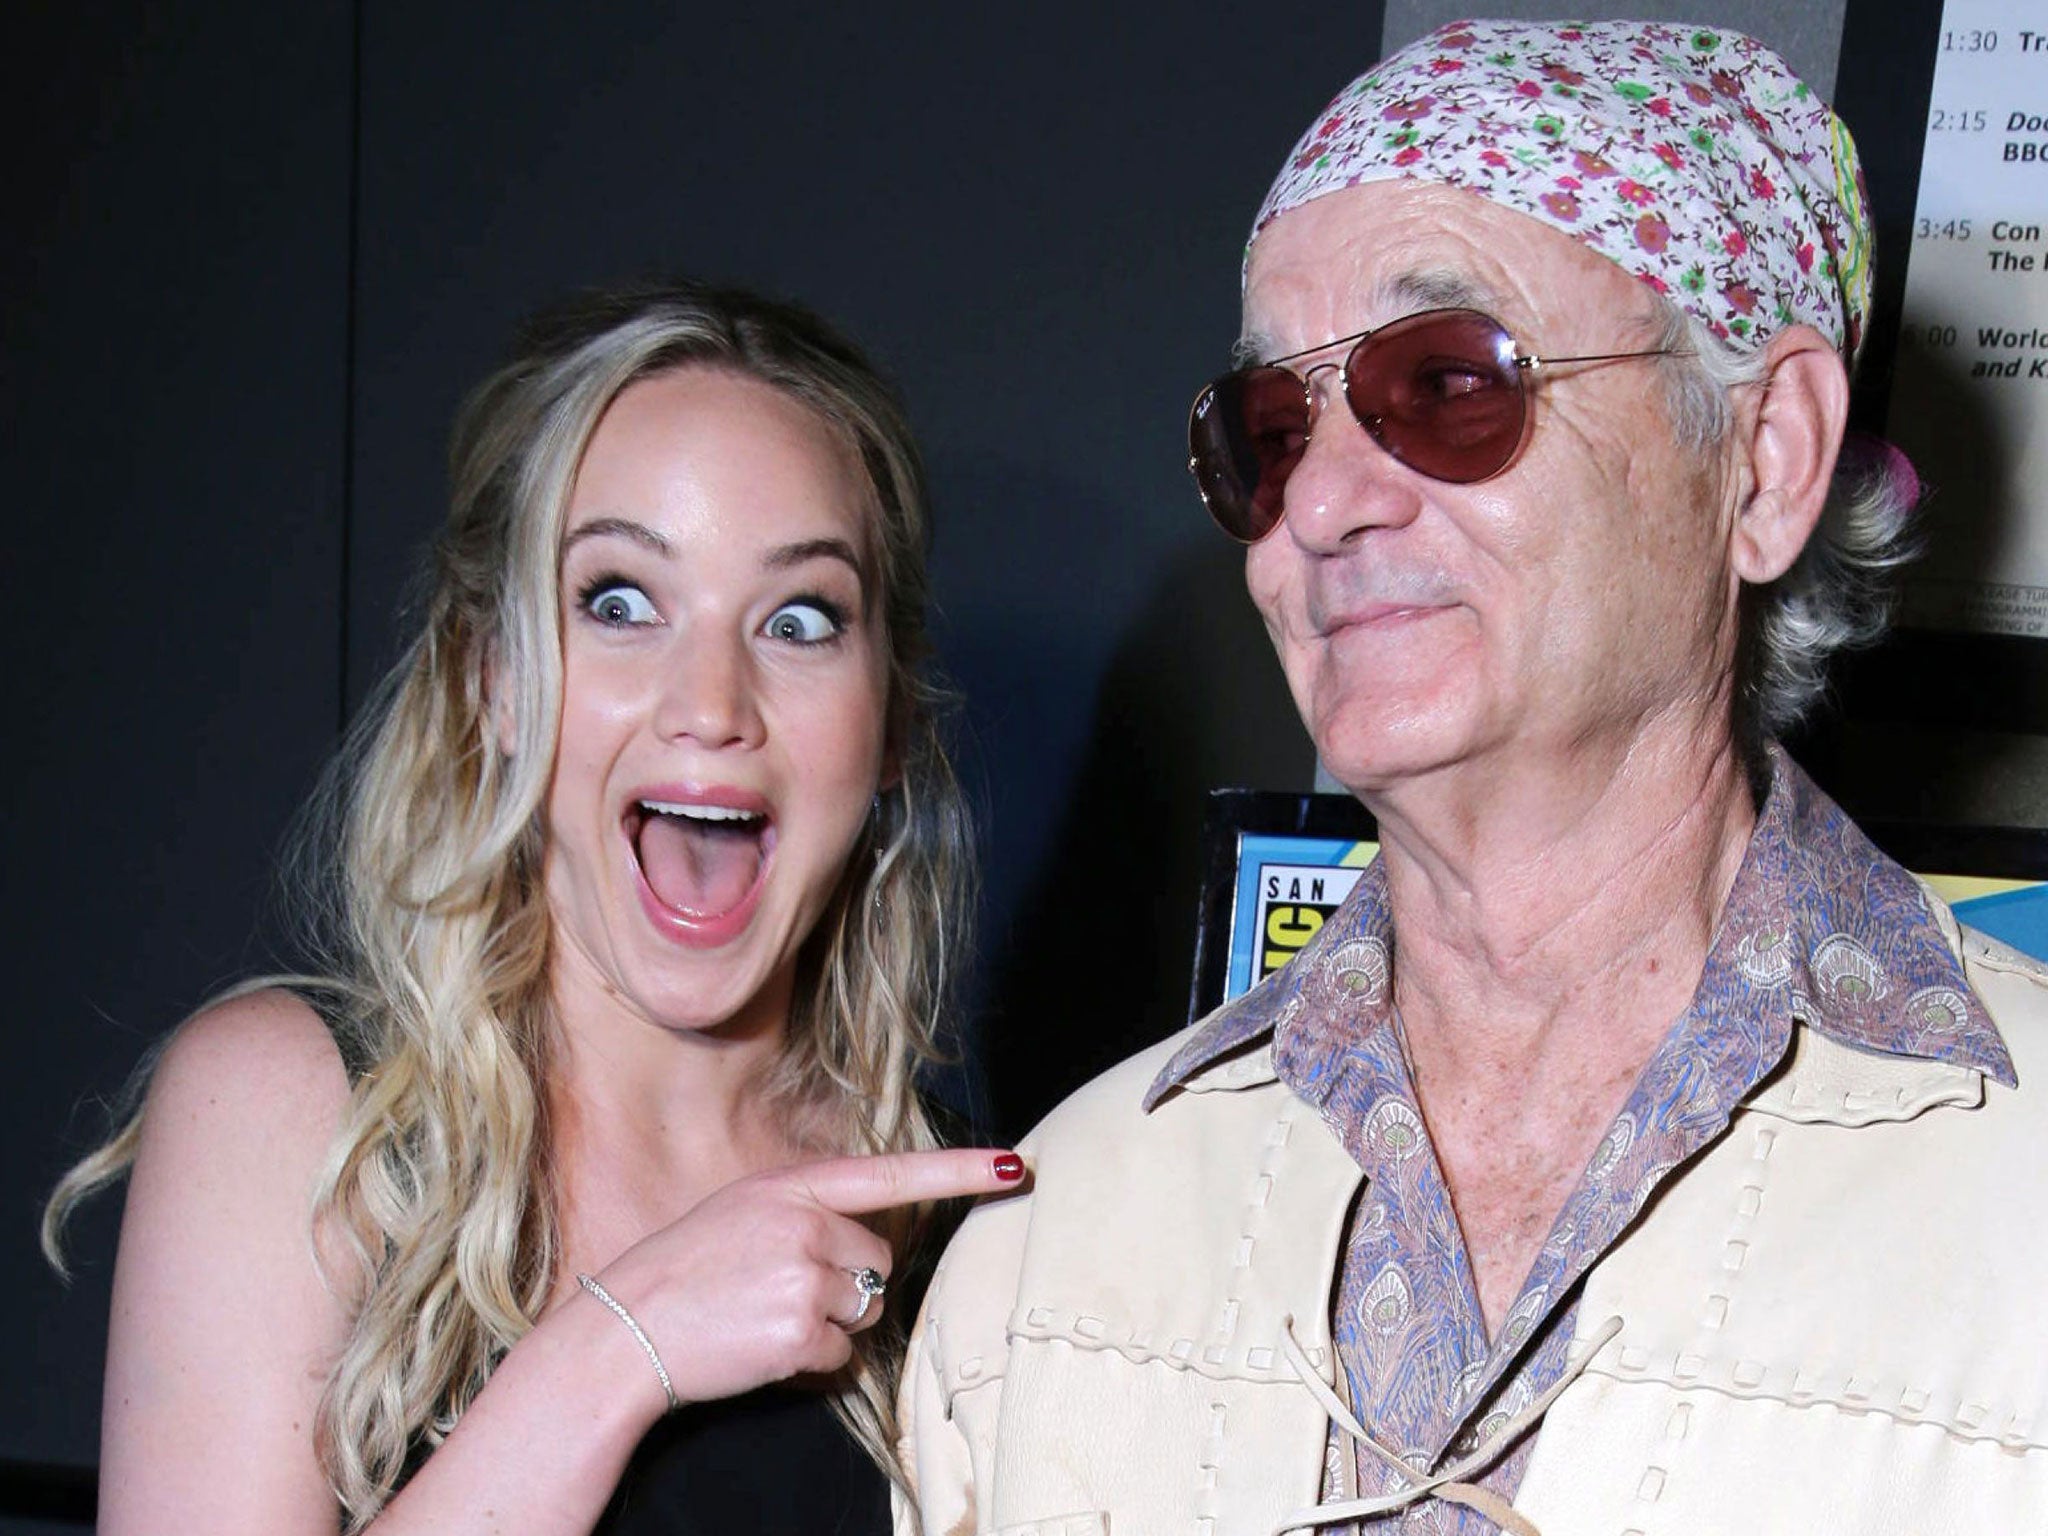 Jennifer Lawrence finally meets her idol Bill Murray at Comic Con 2015